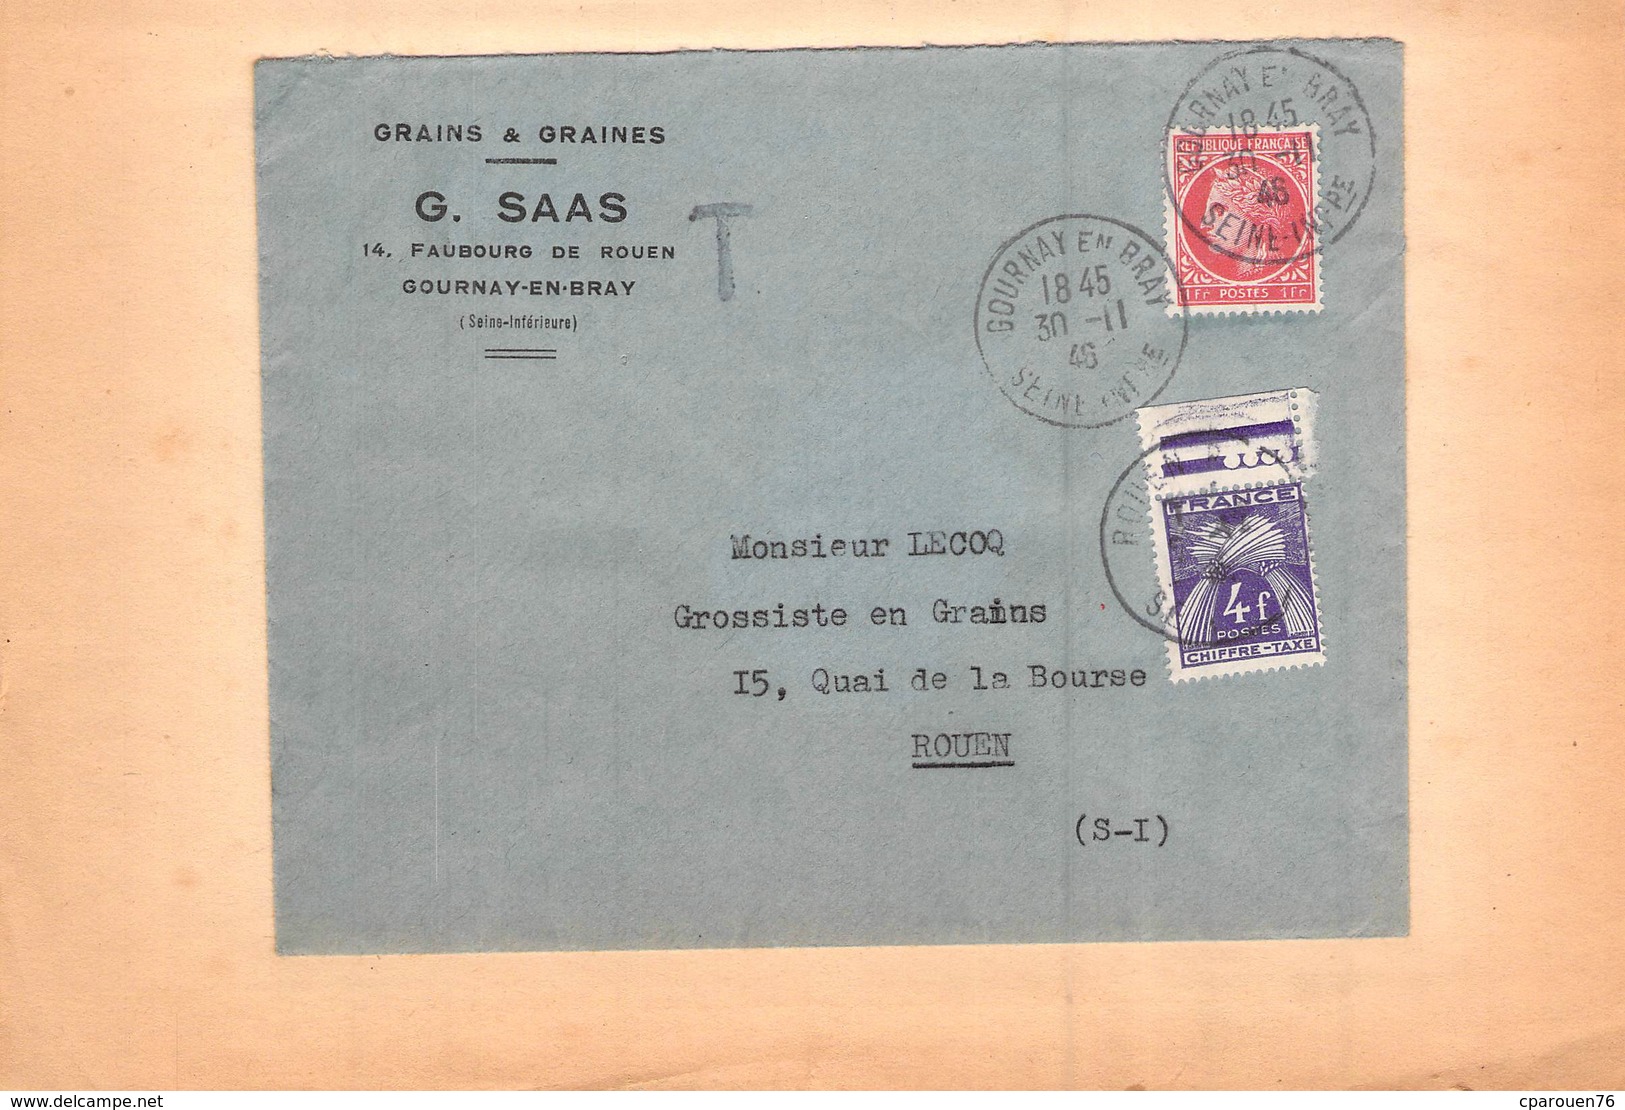 Enveloppe Publicitaire GRAINS GRAINES G SAAS 14 FBG DE ROUEN GOURNAY EN BRAY SEINE MARITIME TIMBRE 1946 TAXE 4 F TIMBRES - Food